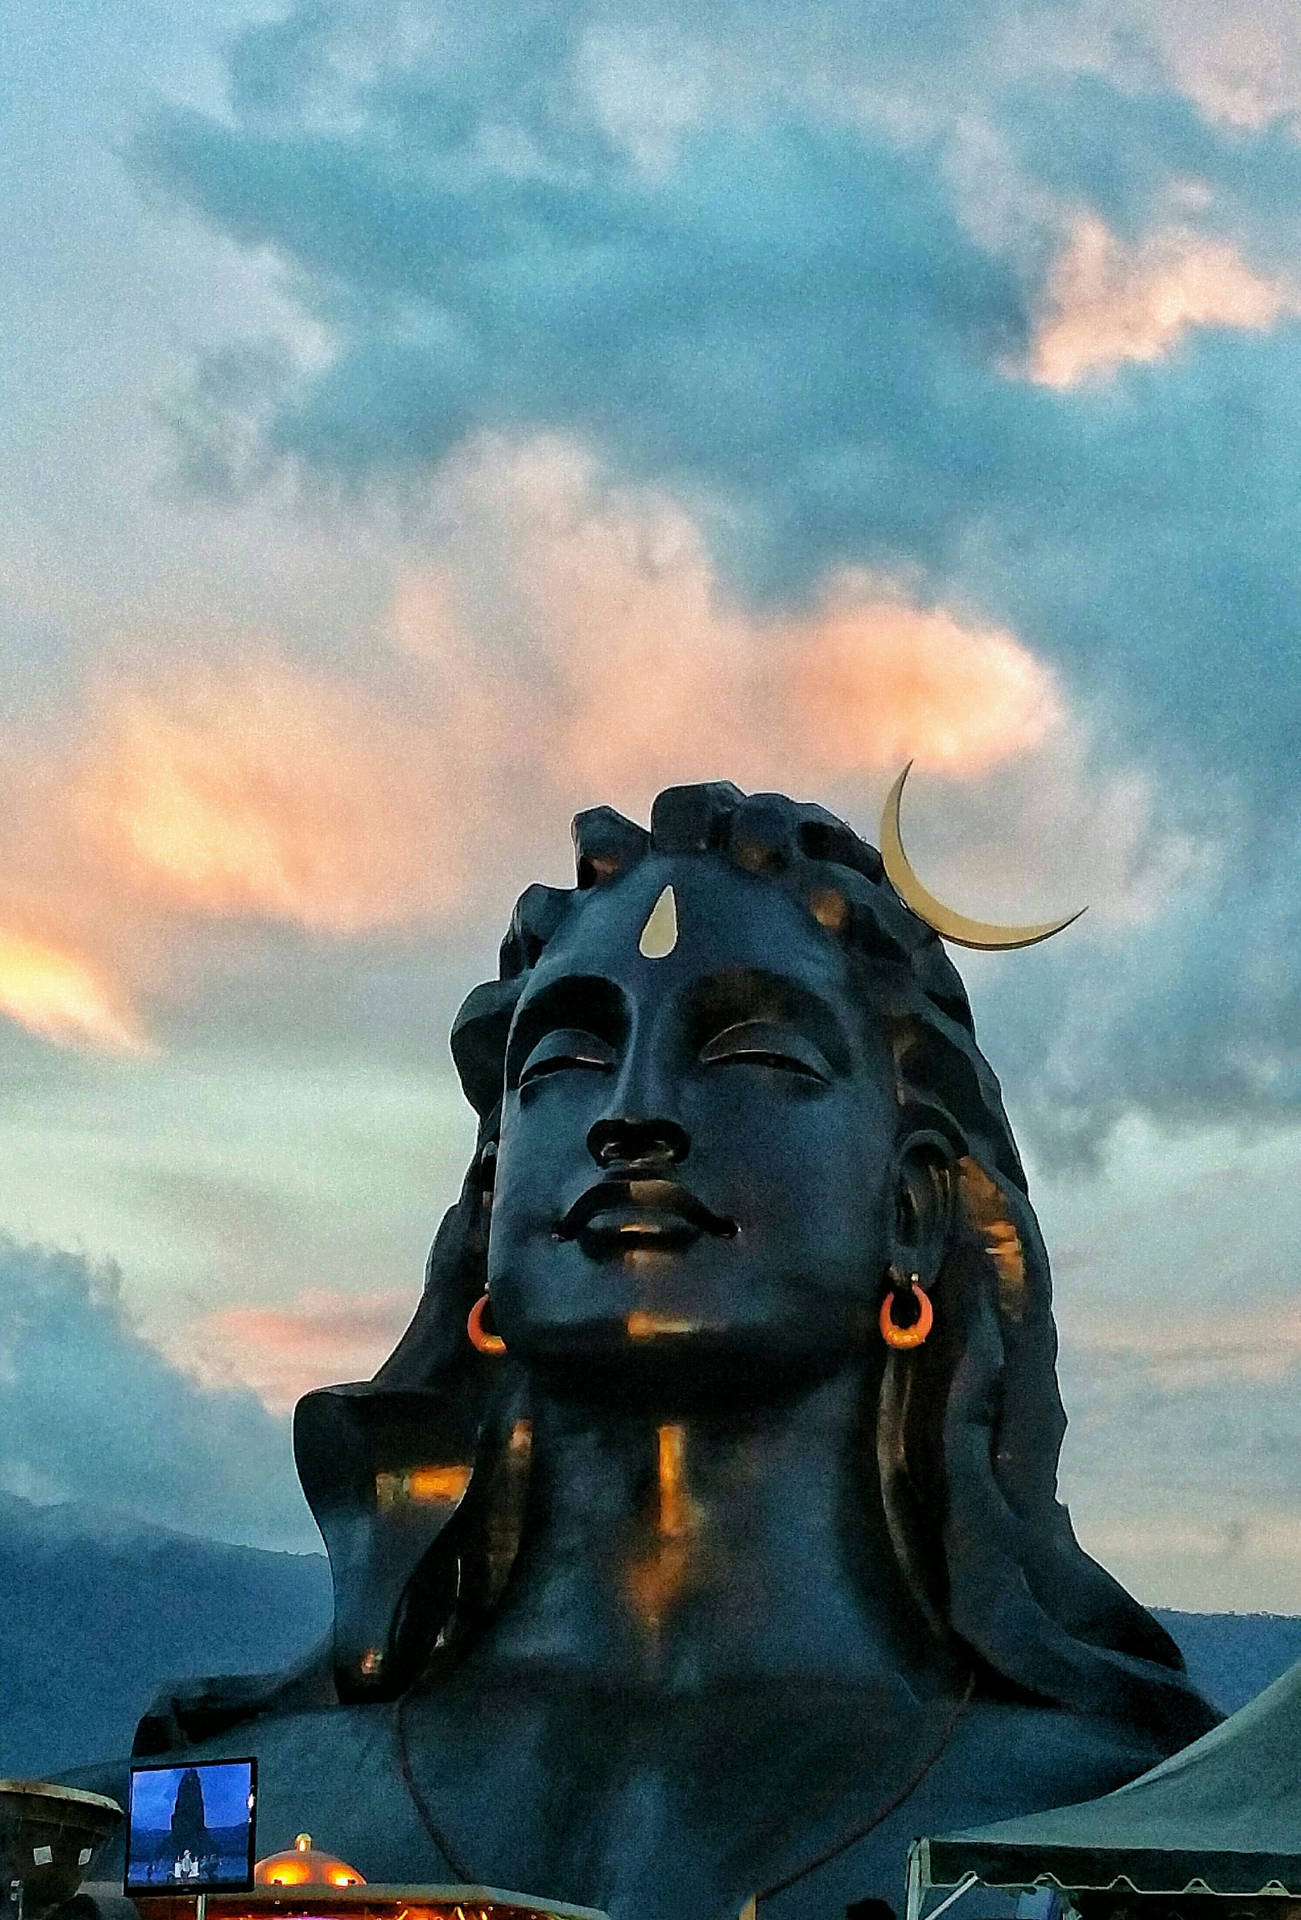 Bholenath Hd Maha Shiva Adiyogi Statue India Background